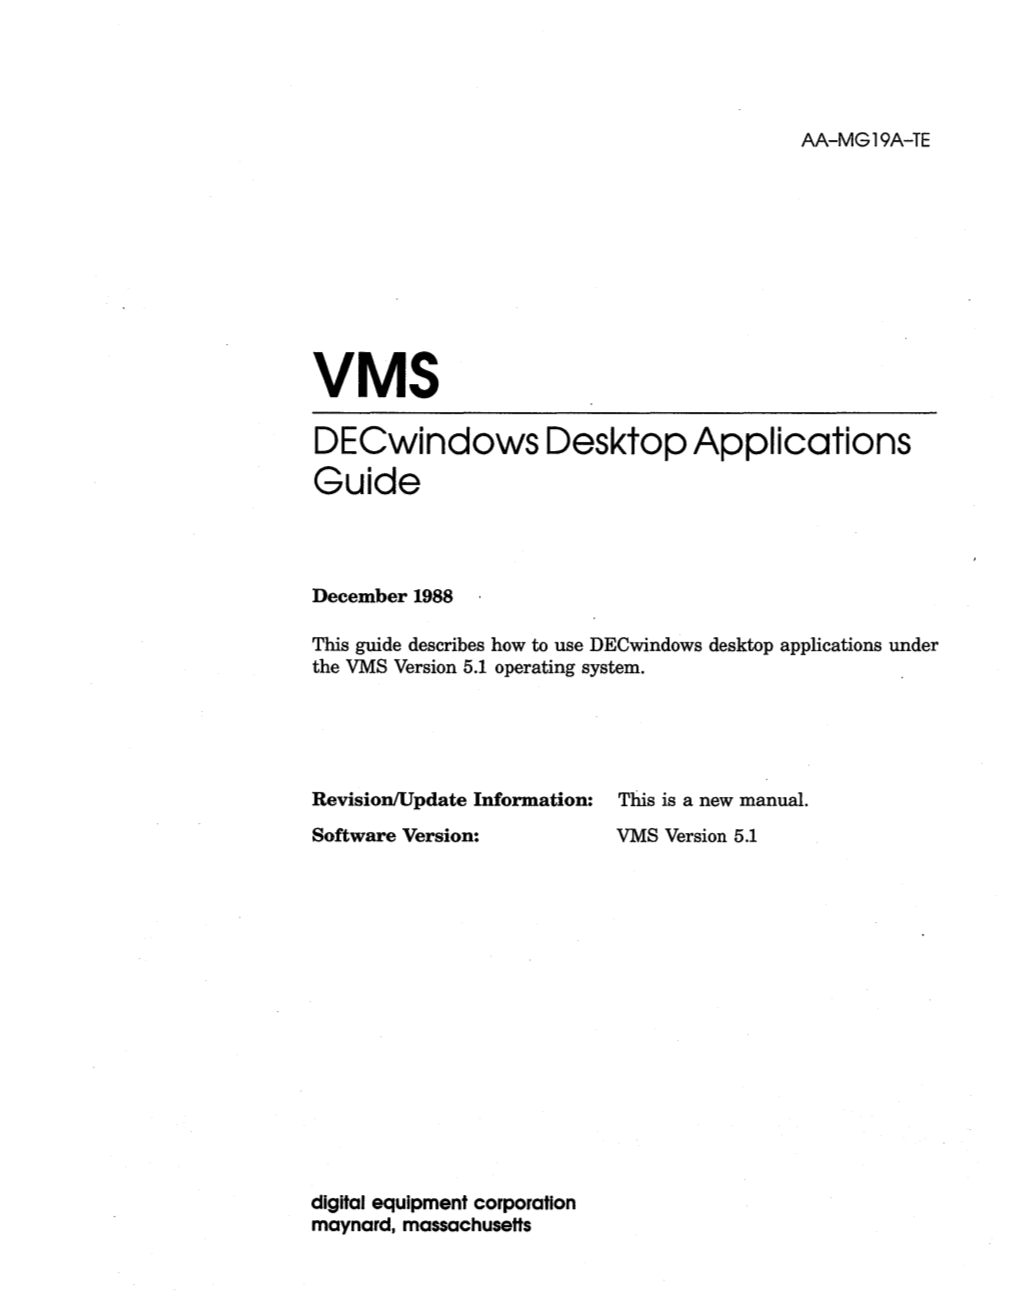 VMS Decwindows Desktop Applications Guide